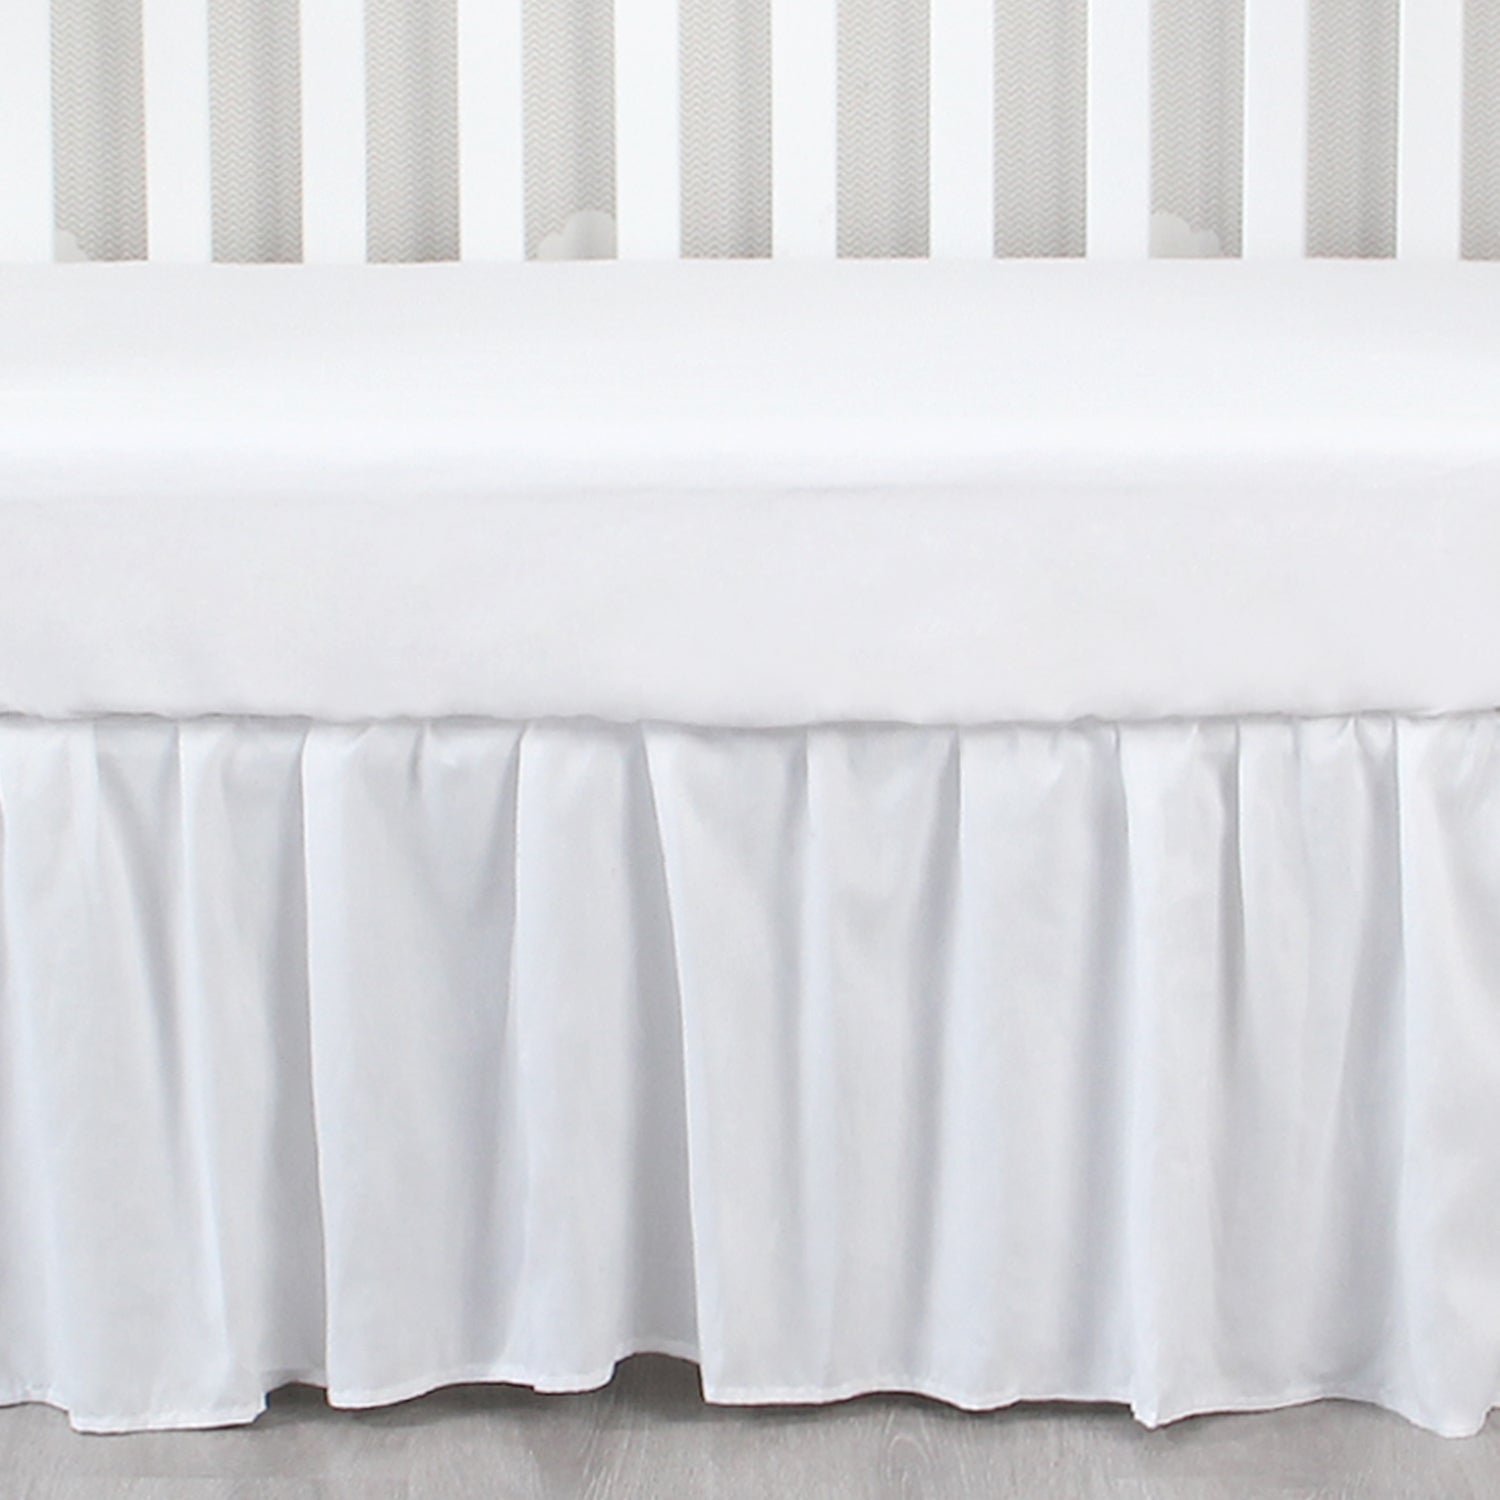 Crib Skirt - Dust Ruffle, Elastic Adjustable Fit, Easy On/Off, 14" Drop, White (for Standard Crib/ Toddler Bed) - Biloban Online Store